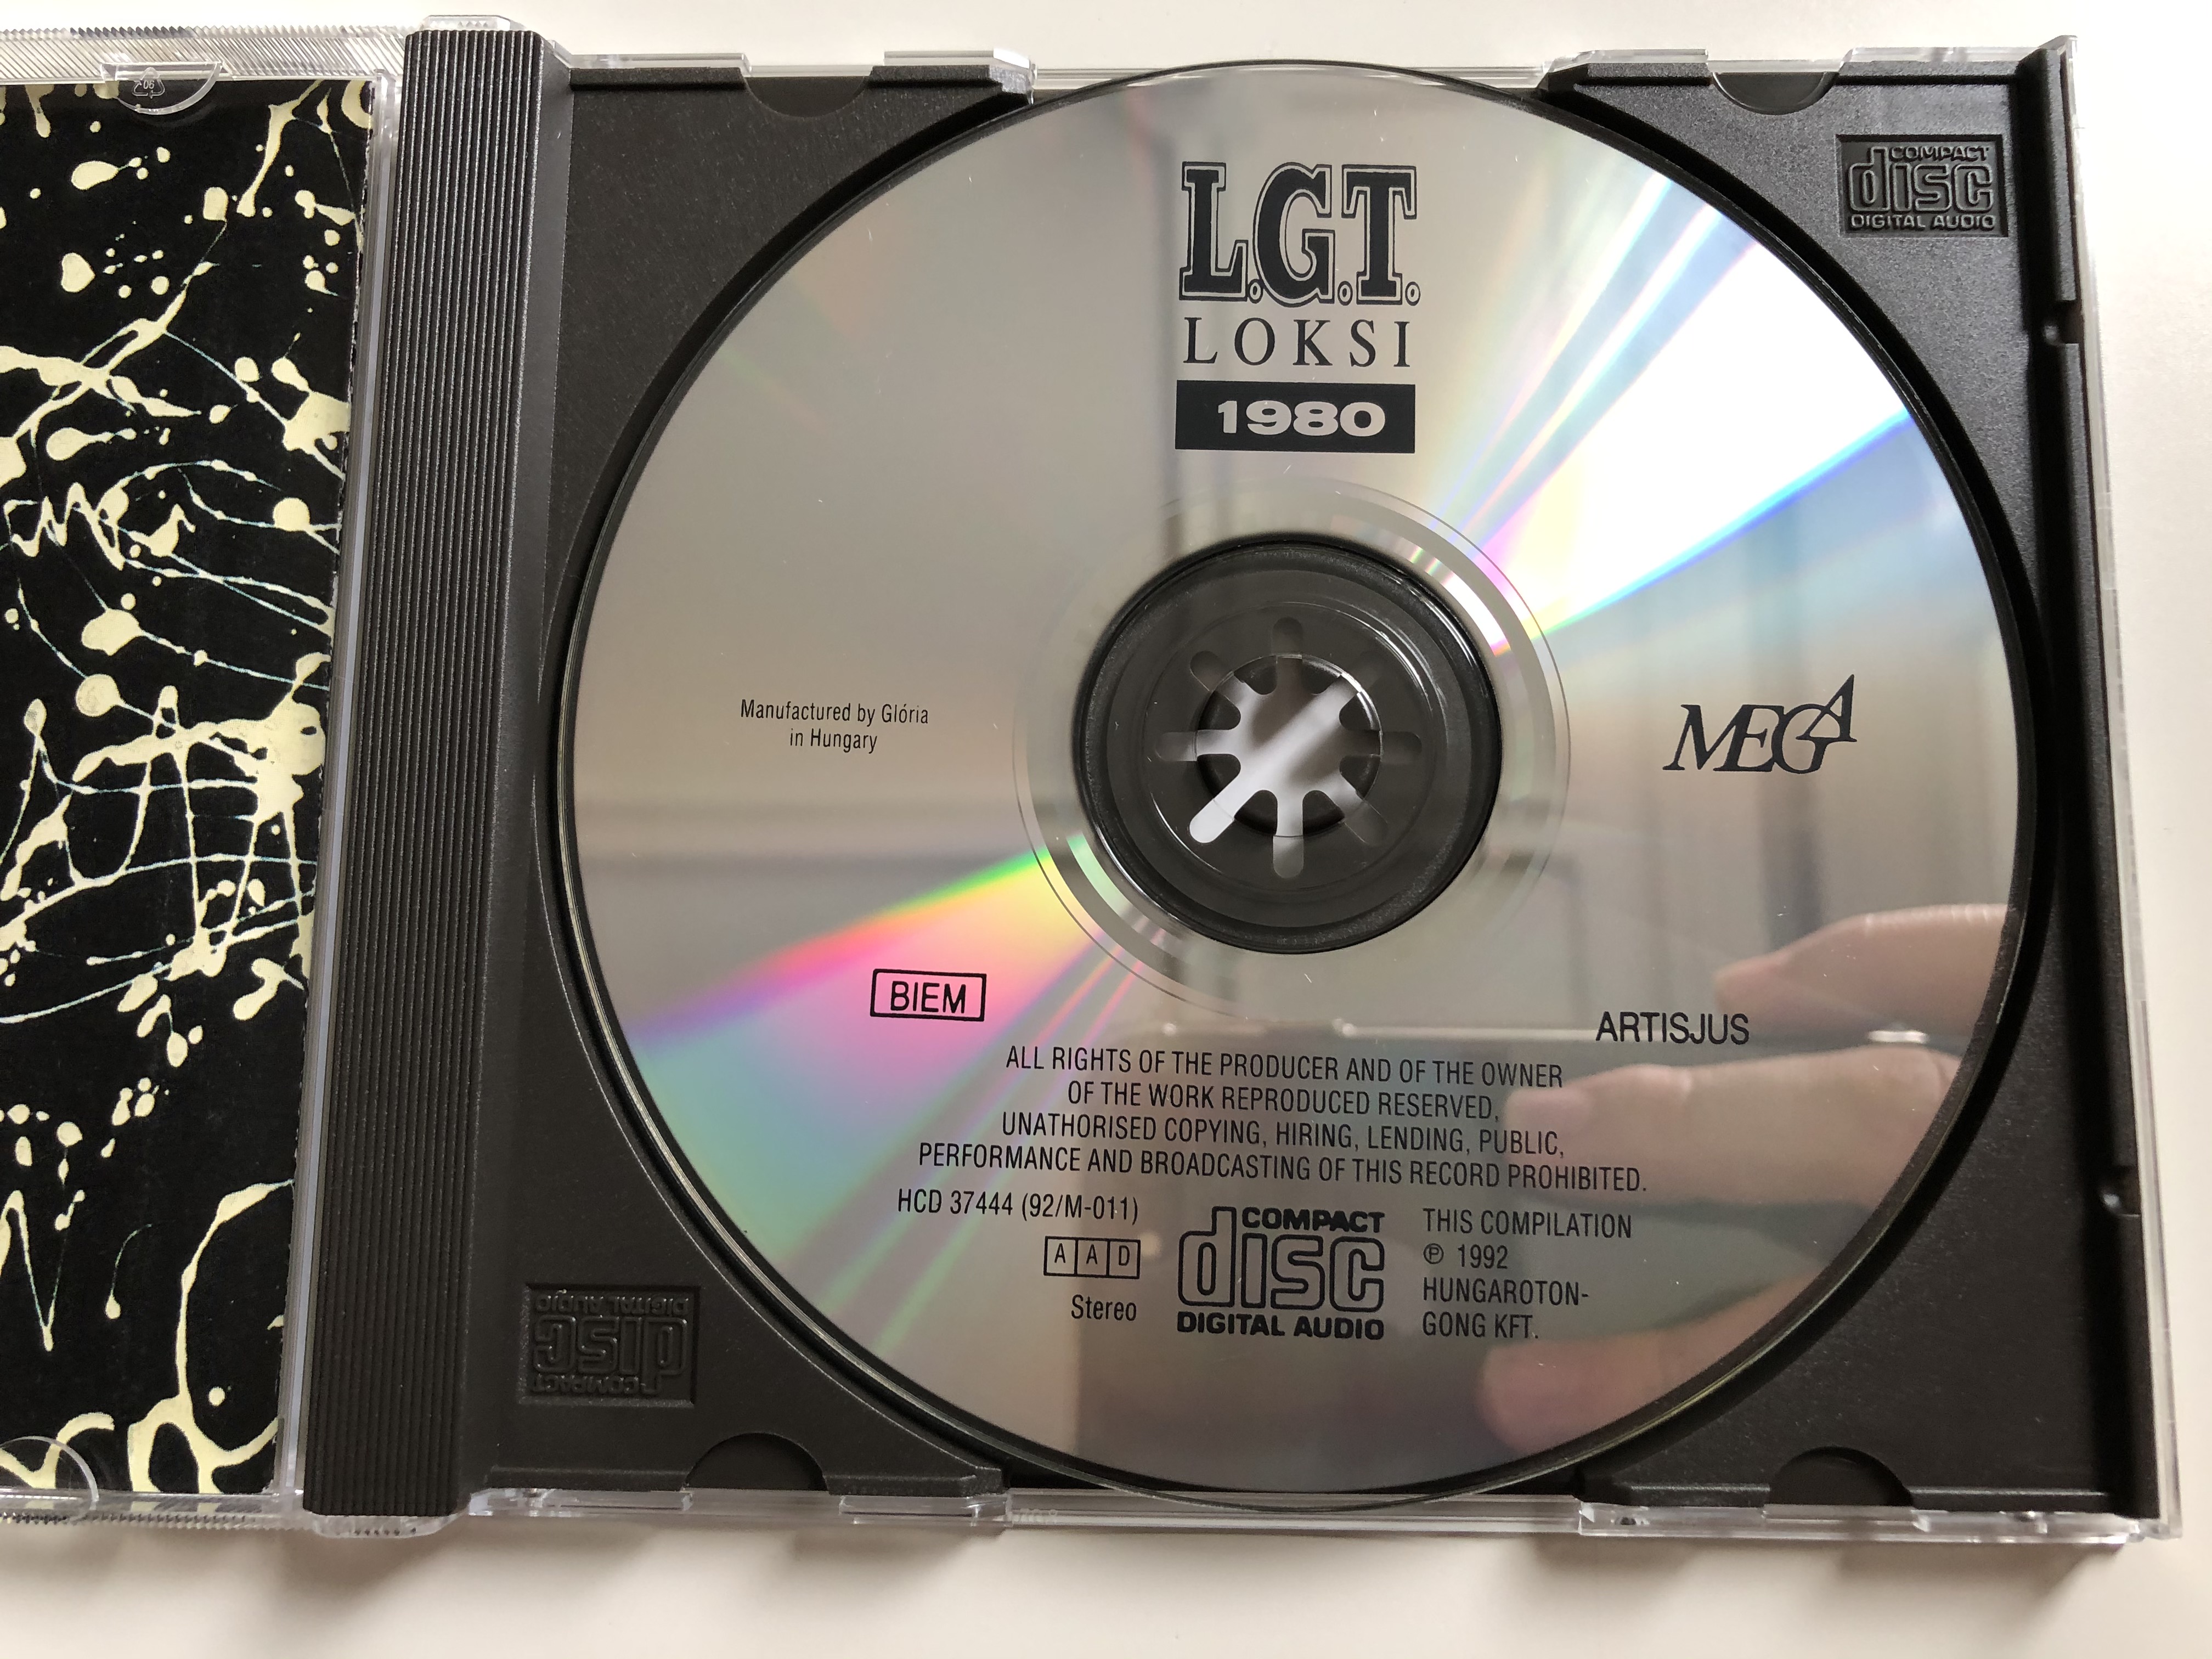 loksi-locomotiv-gt-mega-audio-cd-1992-stereo-hcd-37444-92m-011-3-.jpg